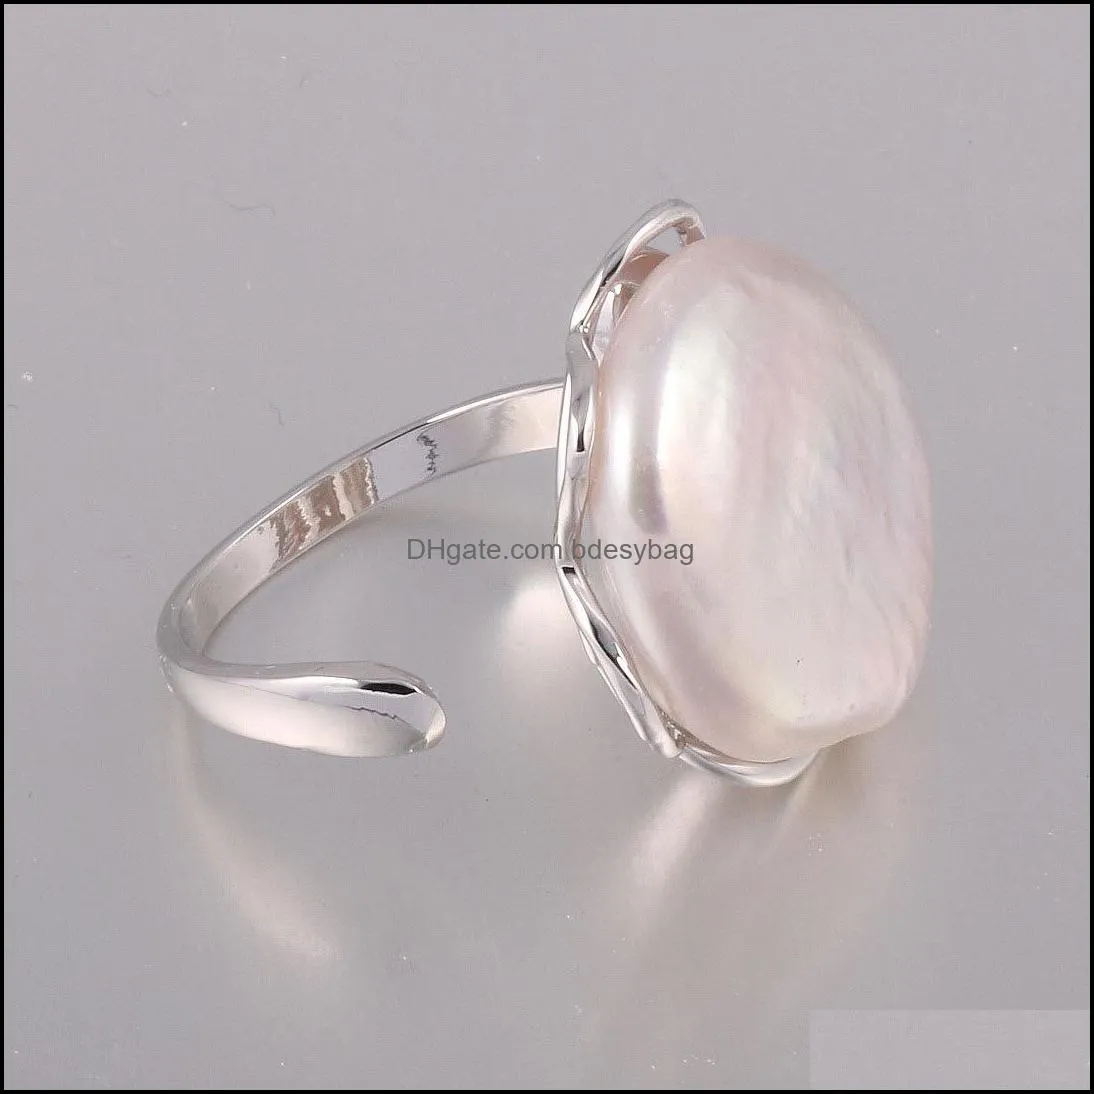 style copper base circular freshwater pearl ring for elegant women love romantic gift